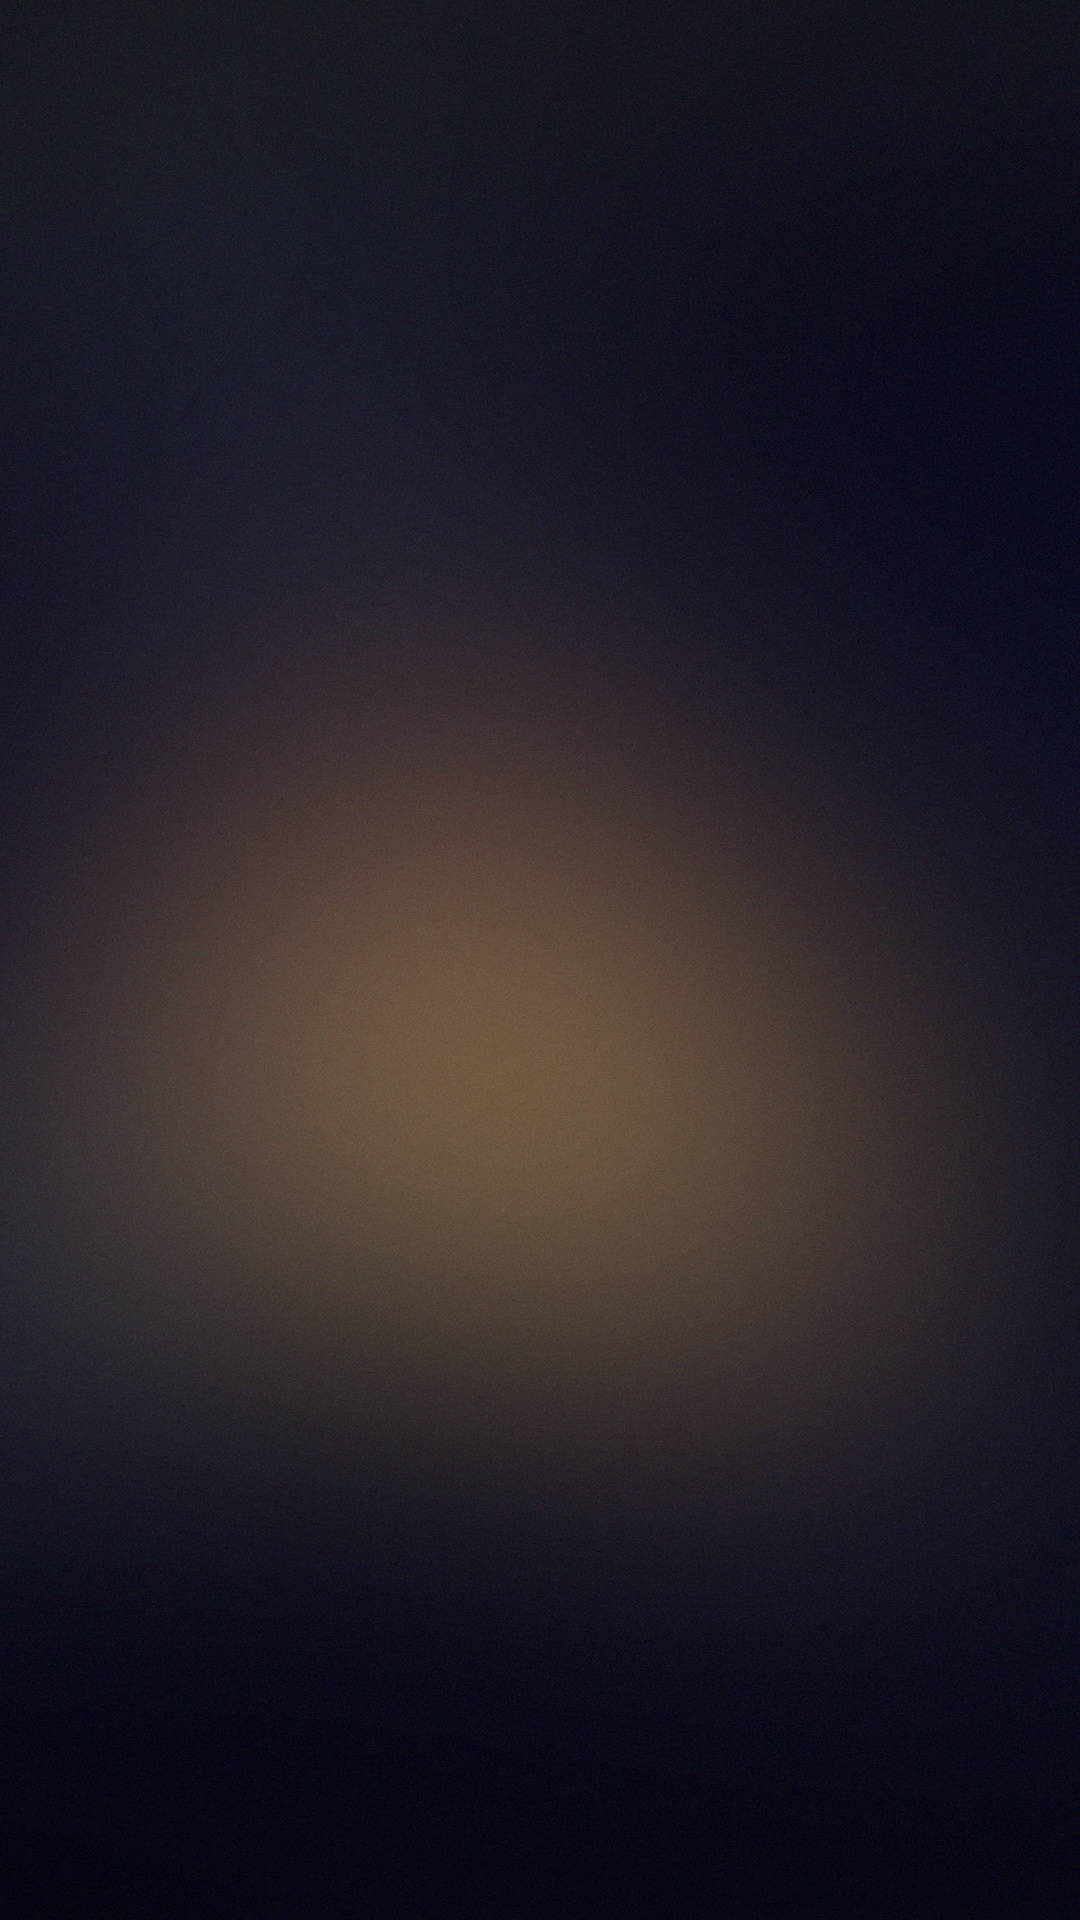 Abstract Brownish Black Minimal Dark Iphone Background